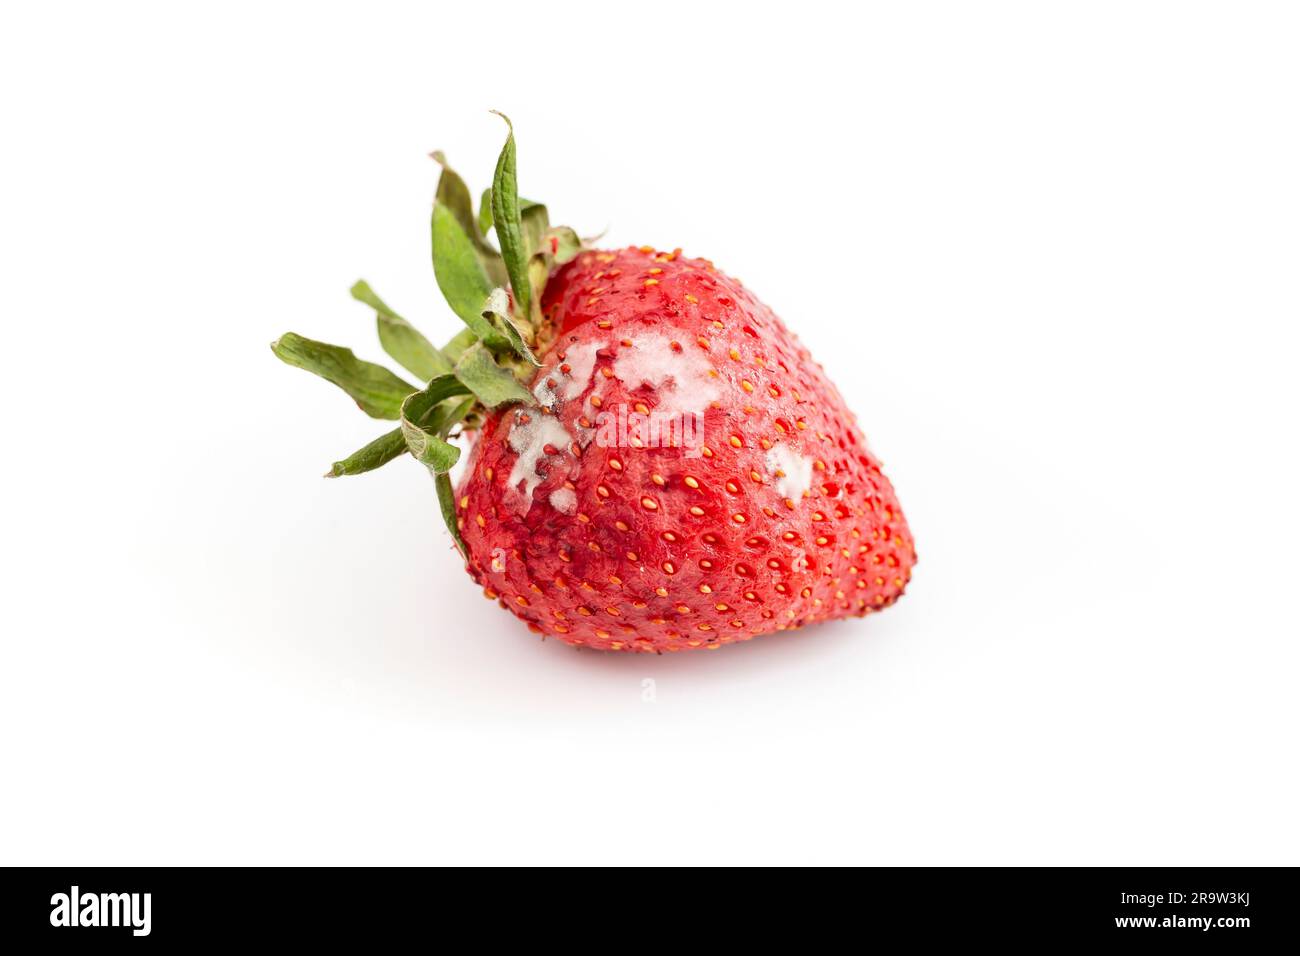 Spoiled molded strawberry isolated on white background Stock Photo